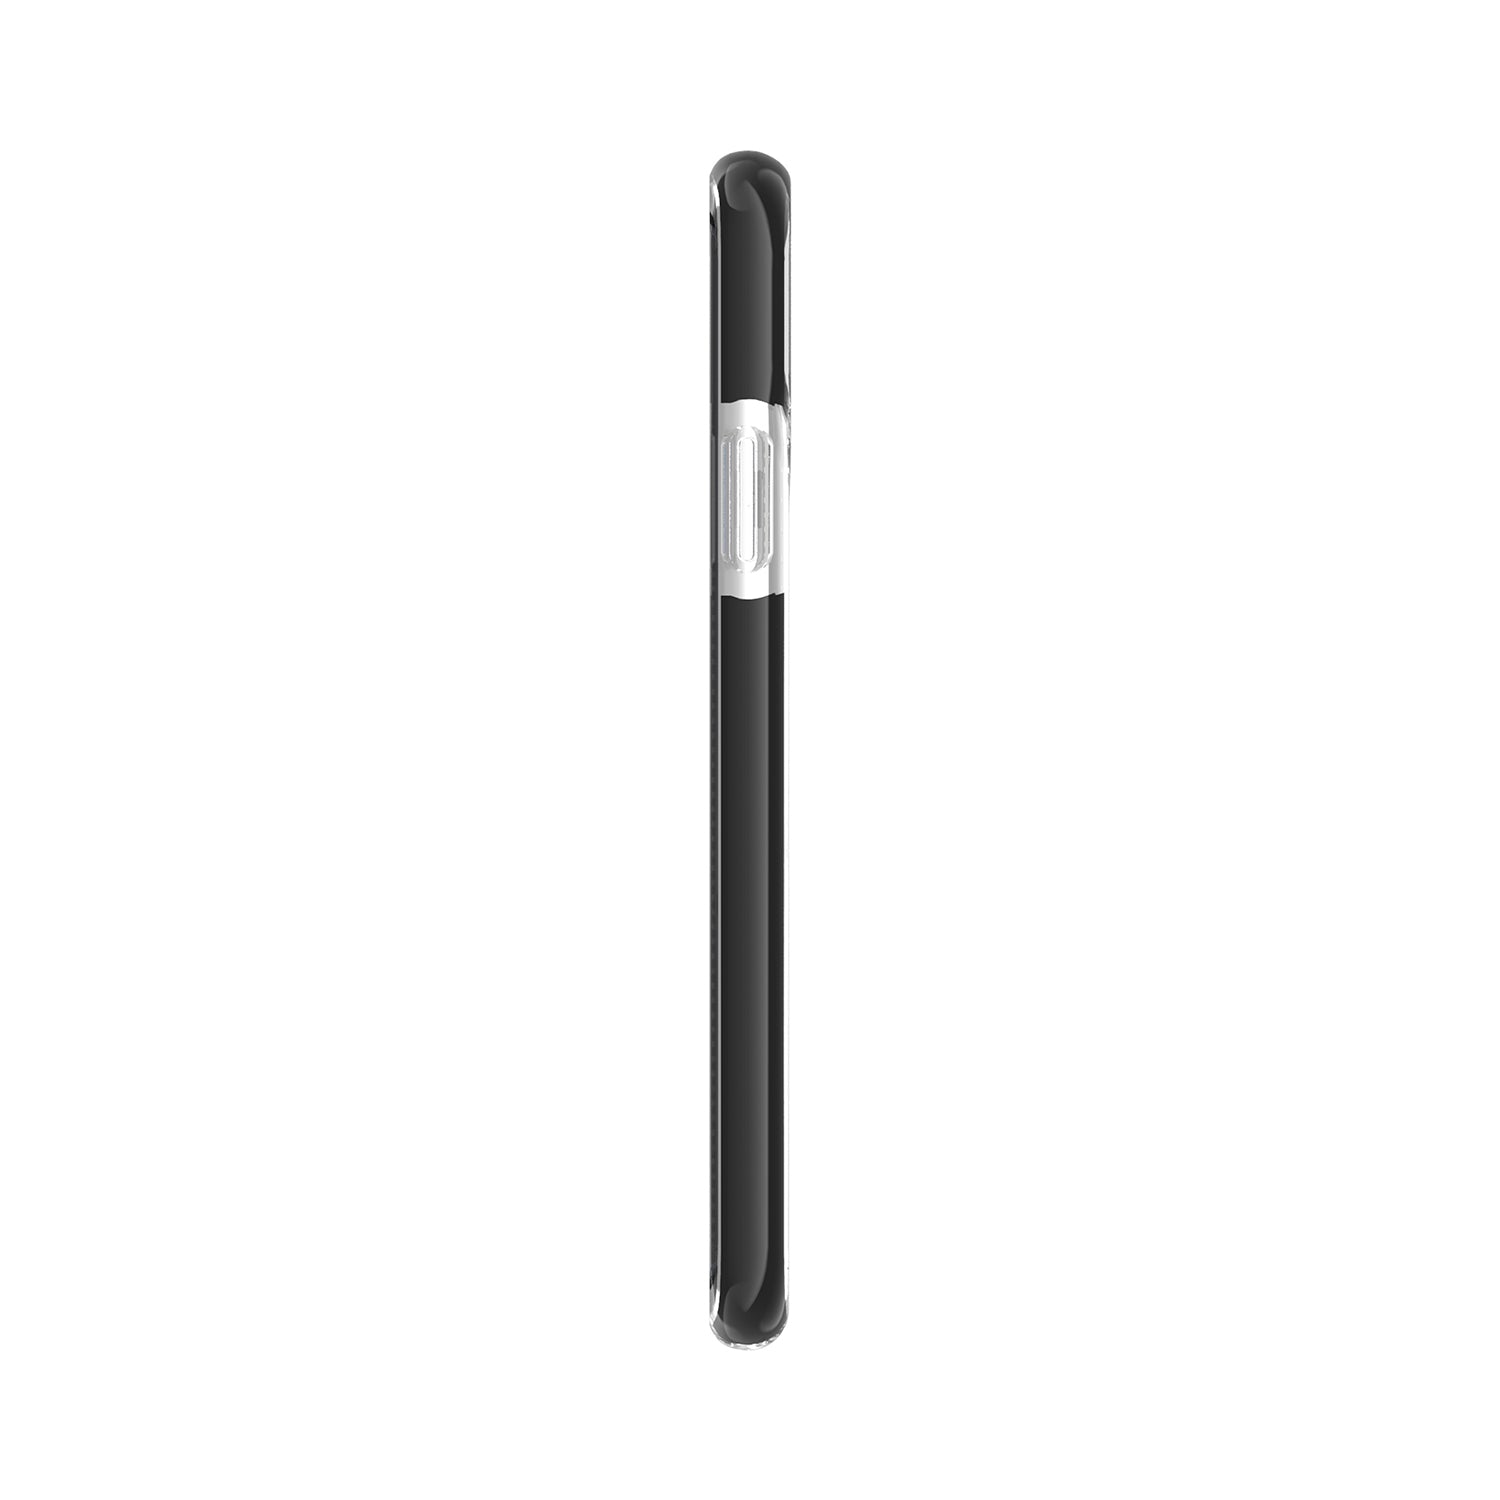 iPhone 13 Transparent TPU Shockproof Drop Resistant Case